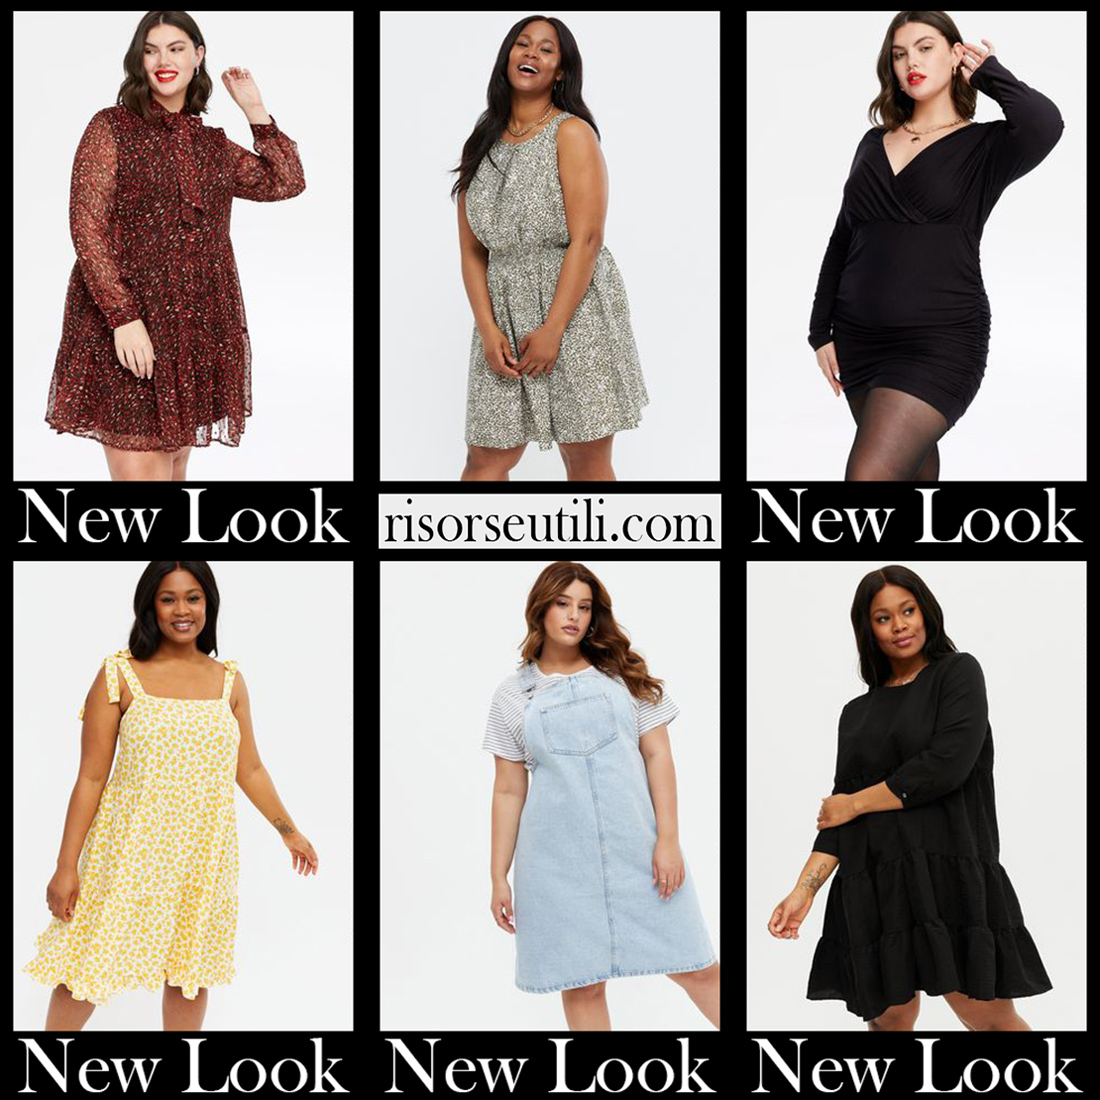 Curvy New Look dresses plus size womens fashion